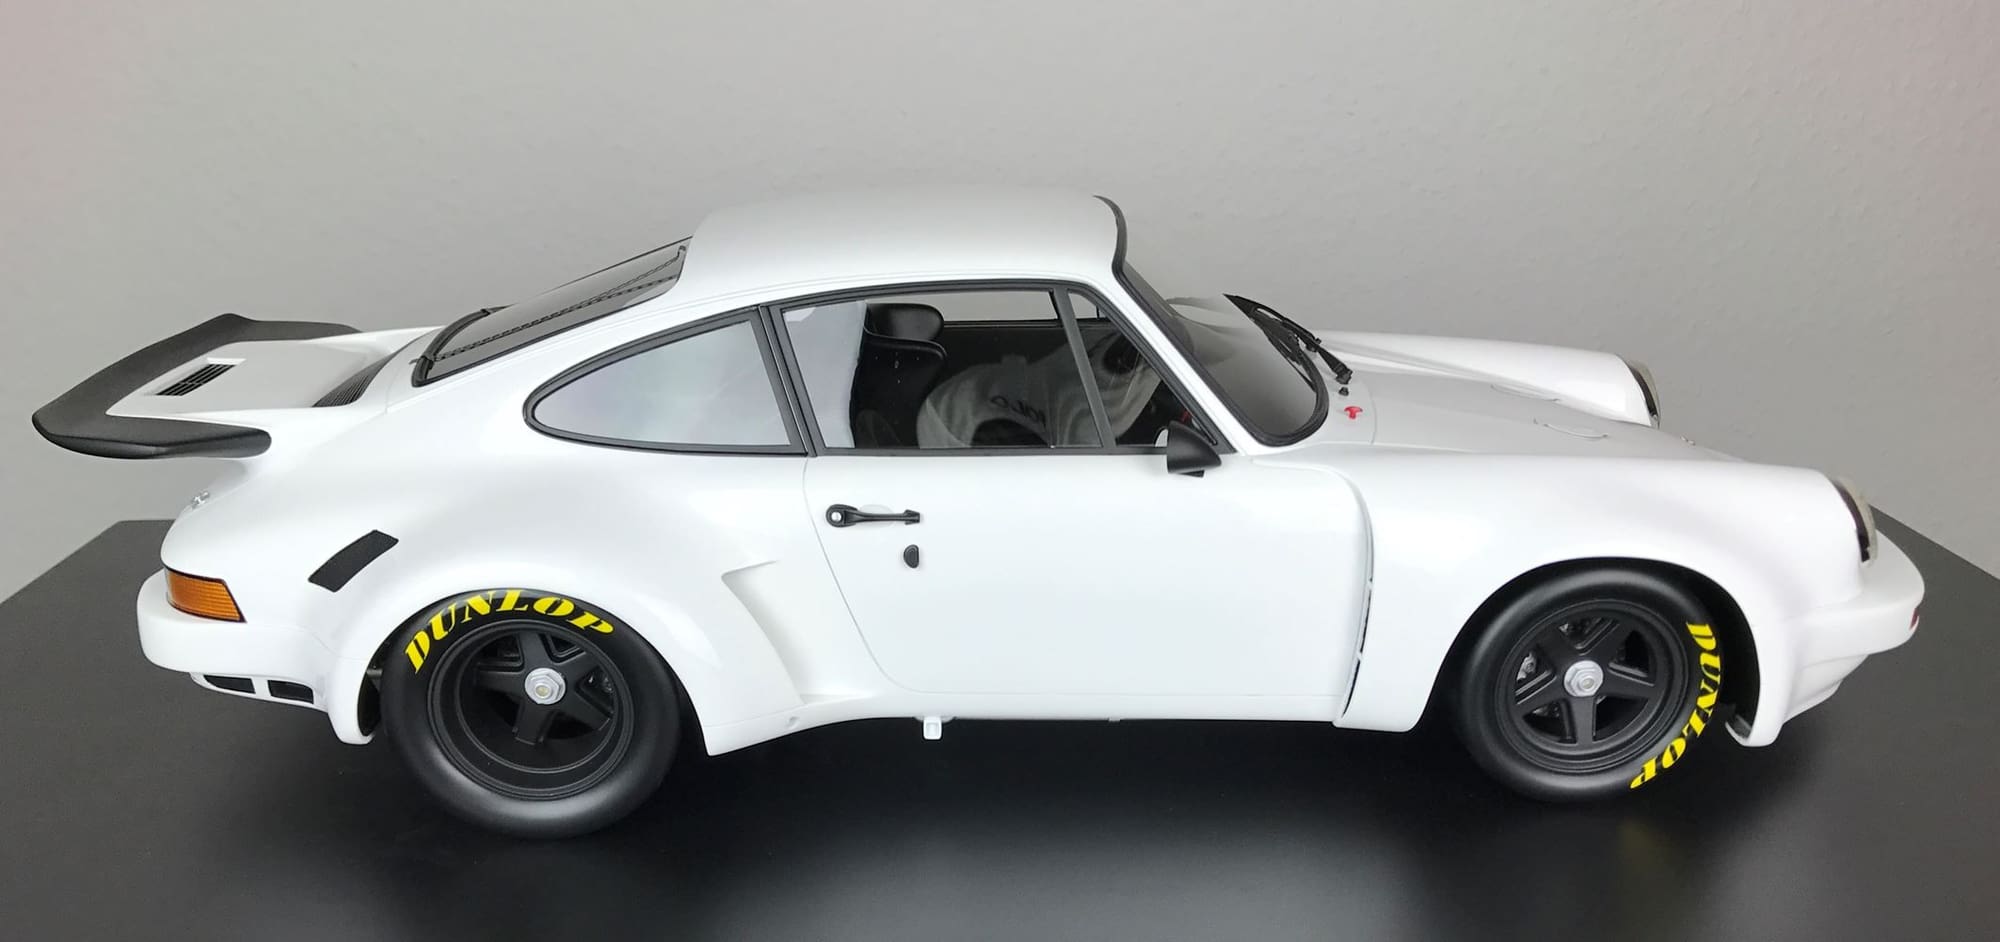 Miscellaneous - Porsche 911 3,0 RSR Model, size 1/8 - New - 1973 to 1974 Porsche 911 - Frankfurt, Germany